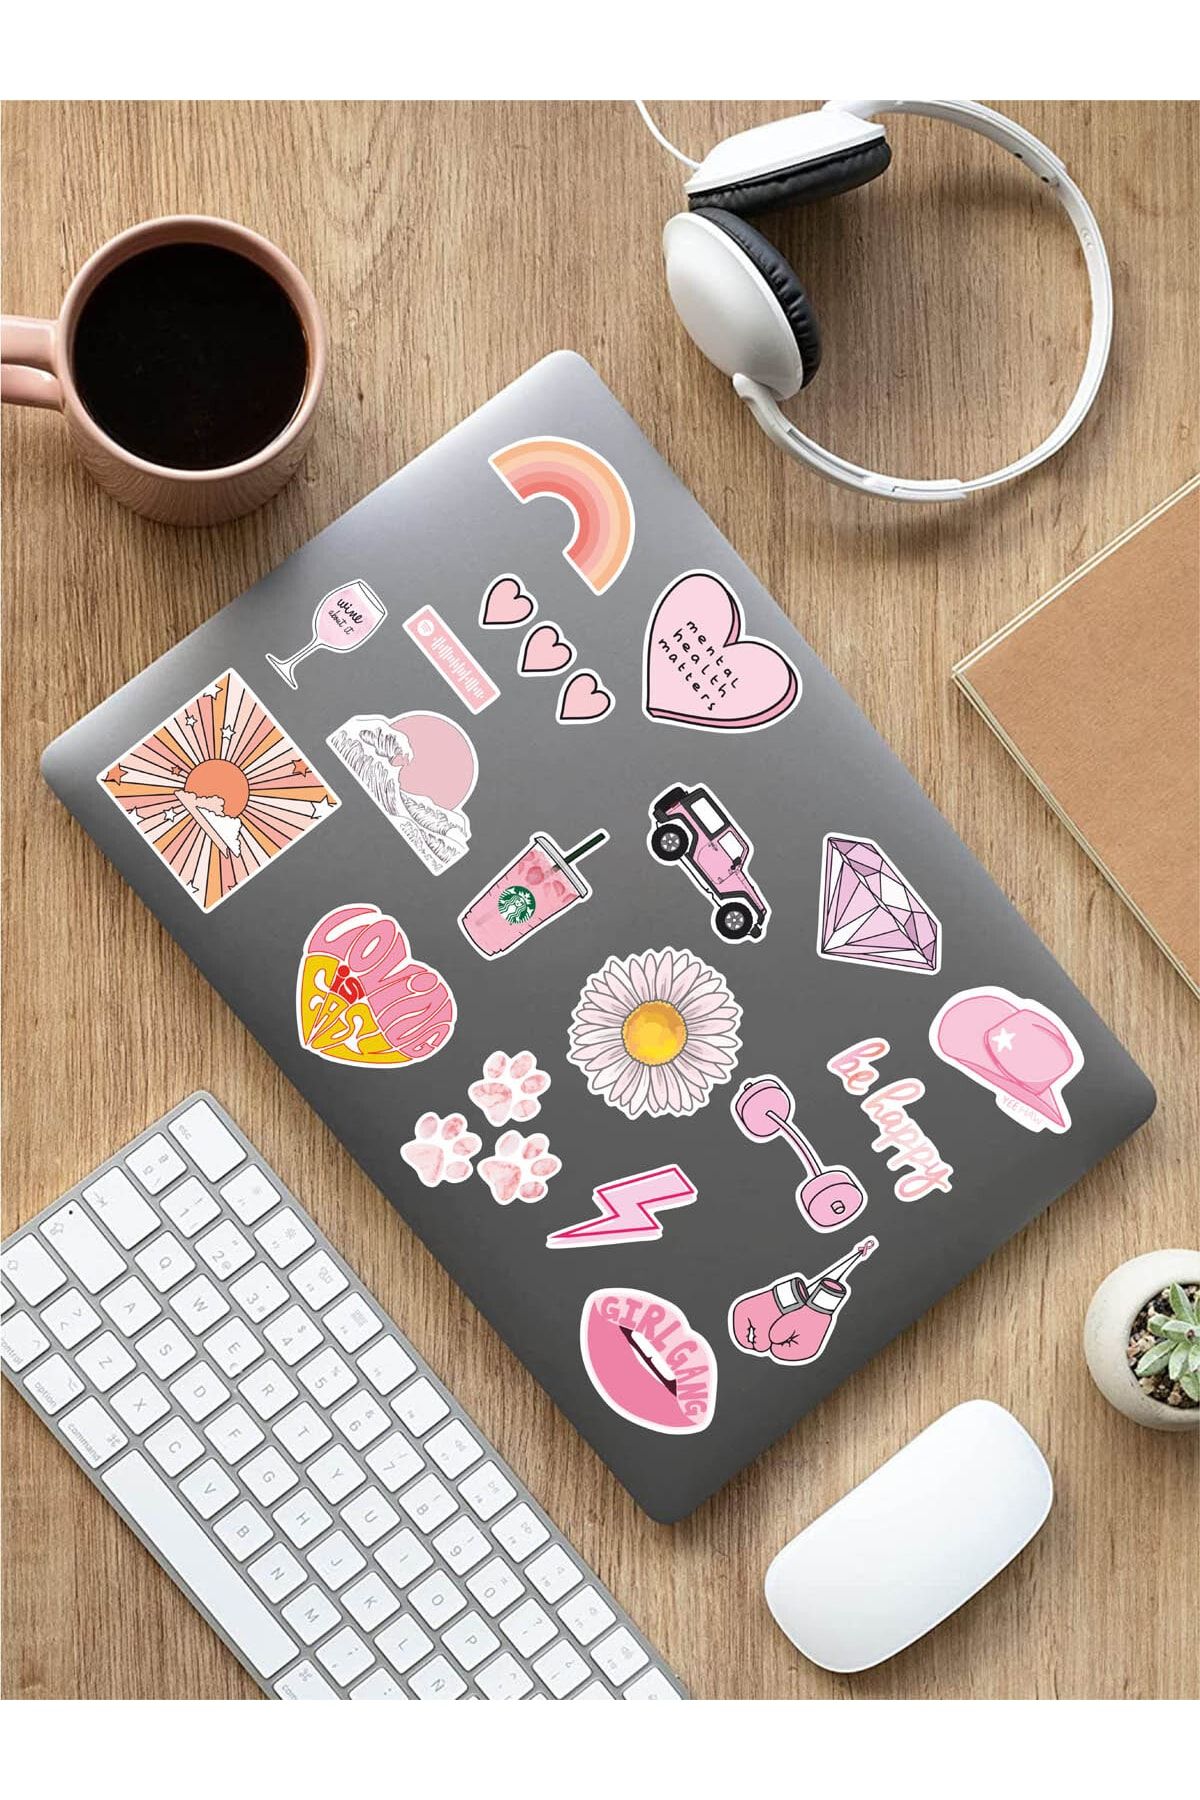 AR Sticker - Vsco Pink Laptop Notebook Tablet Sticker Set 5